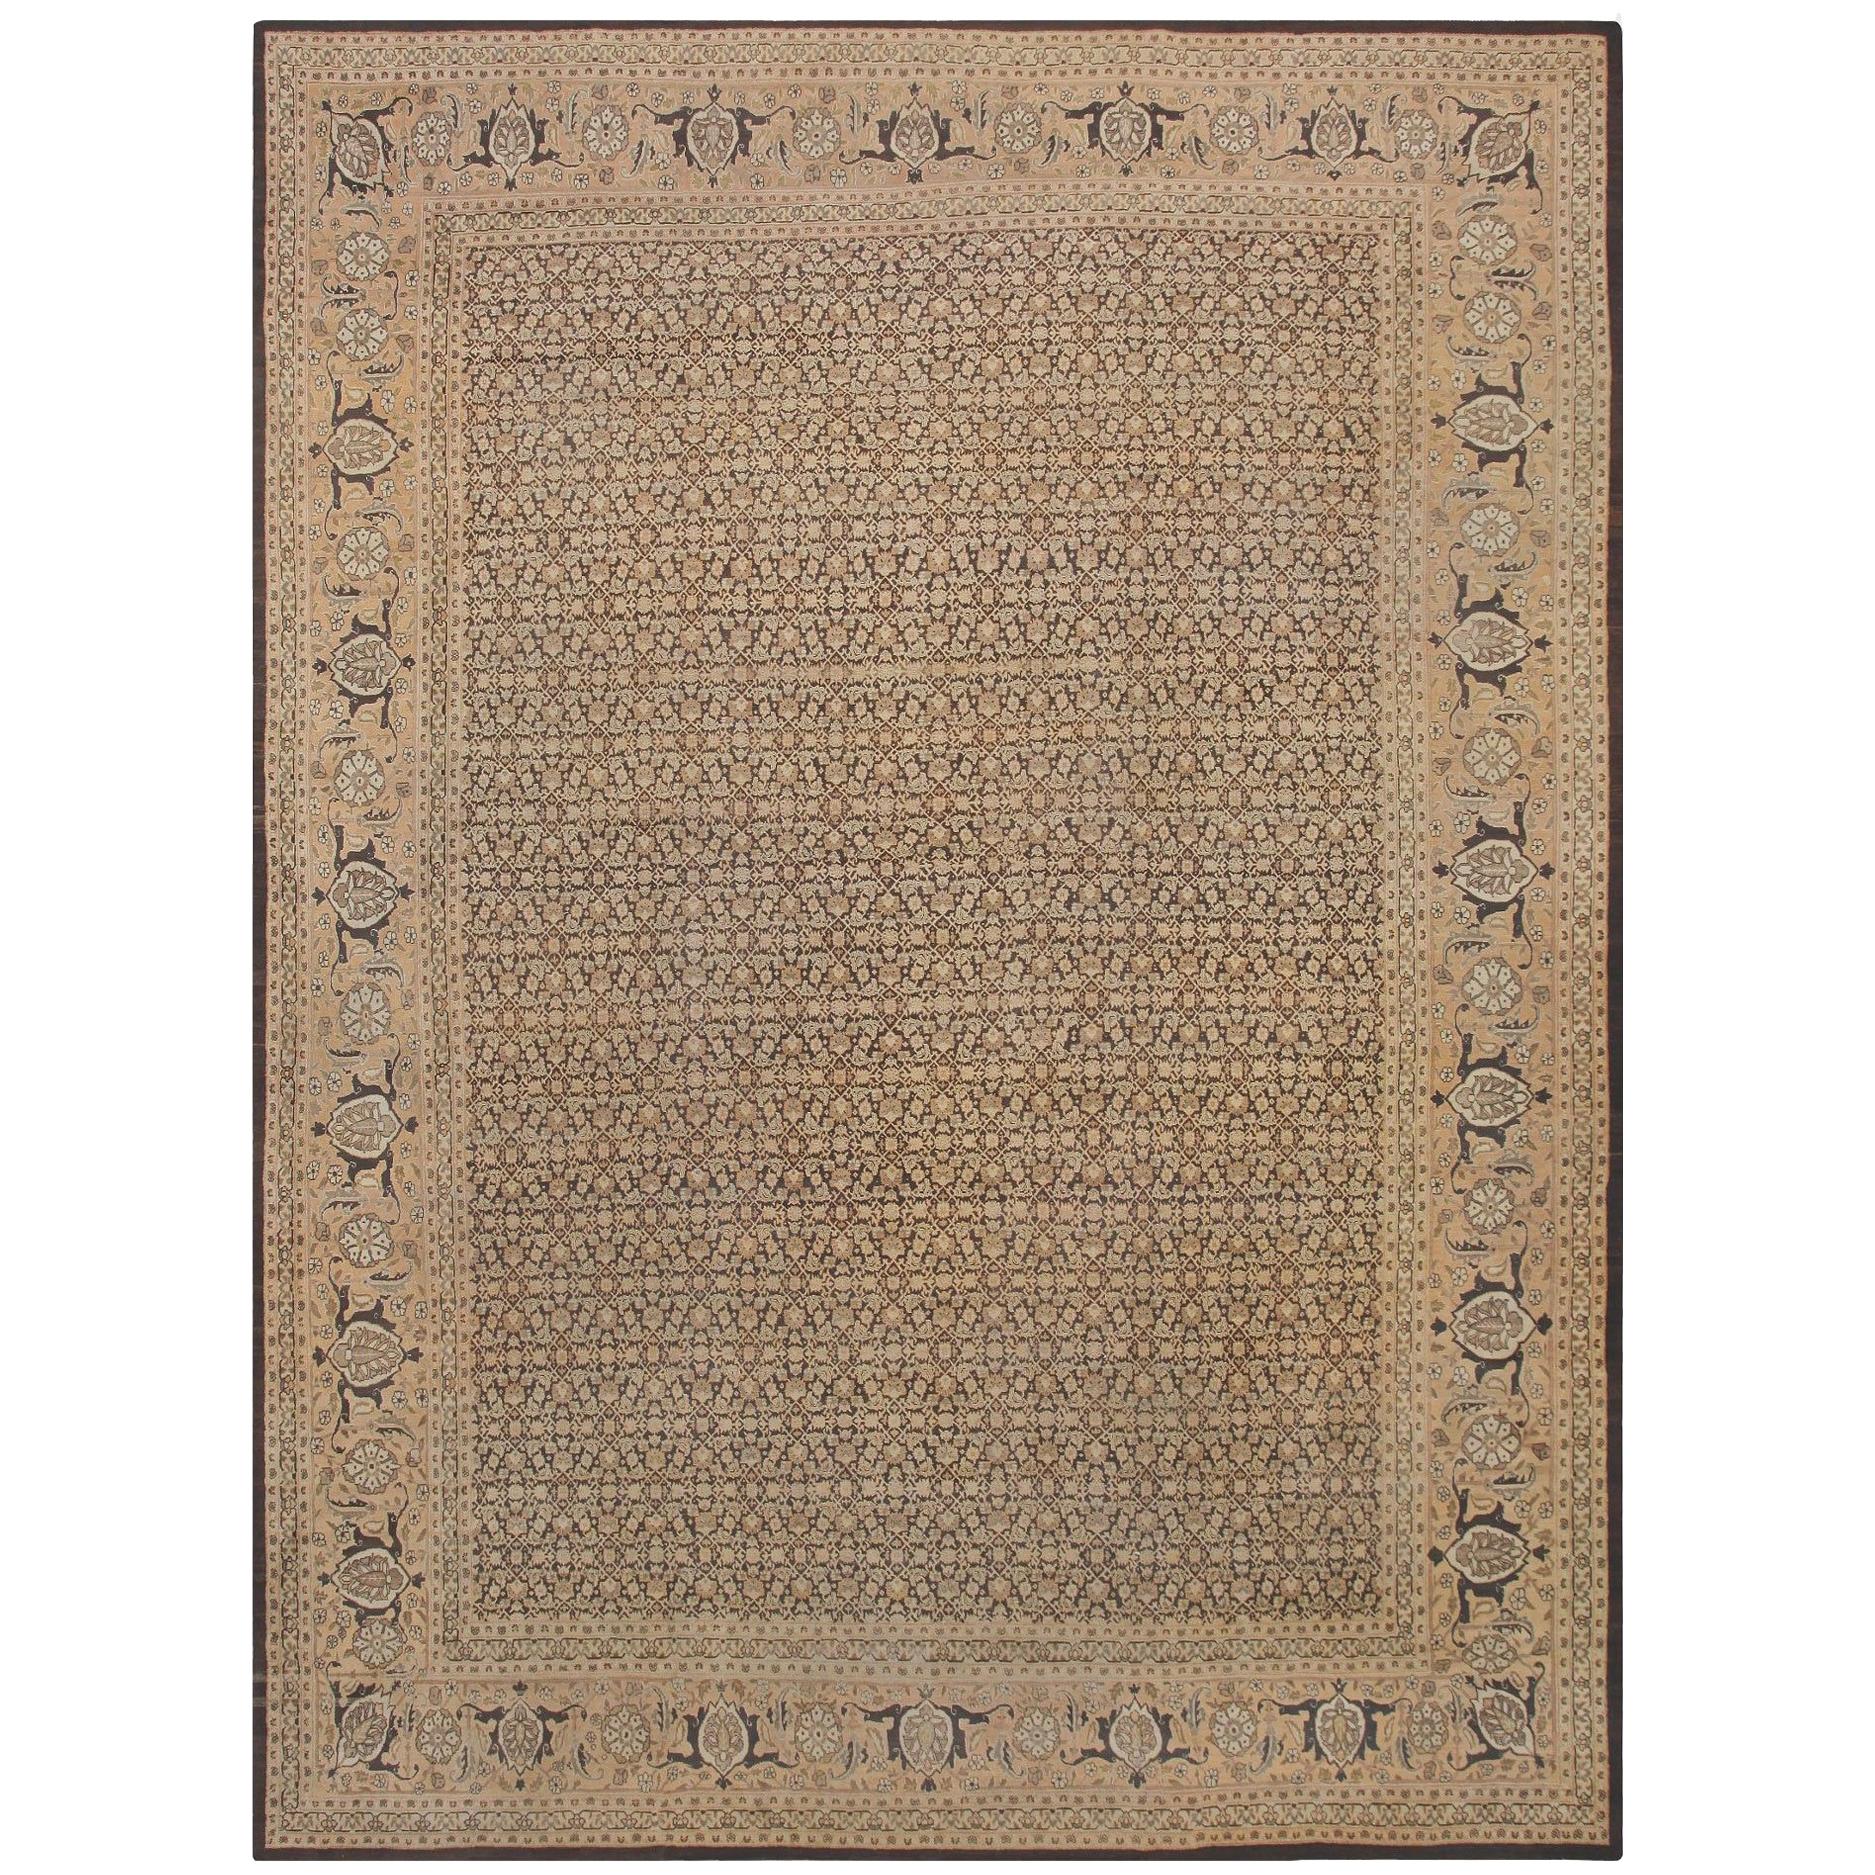 Rare tapis persan Tabriz à fond Brown. 13 pieds x 17 pieds 4 pouces